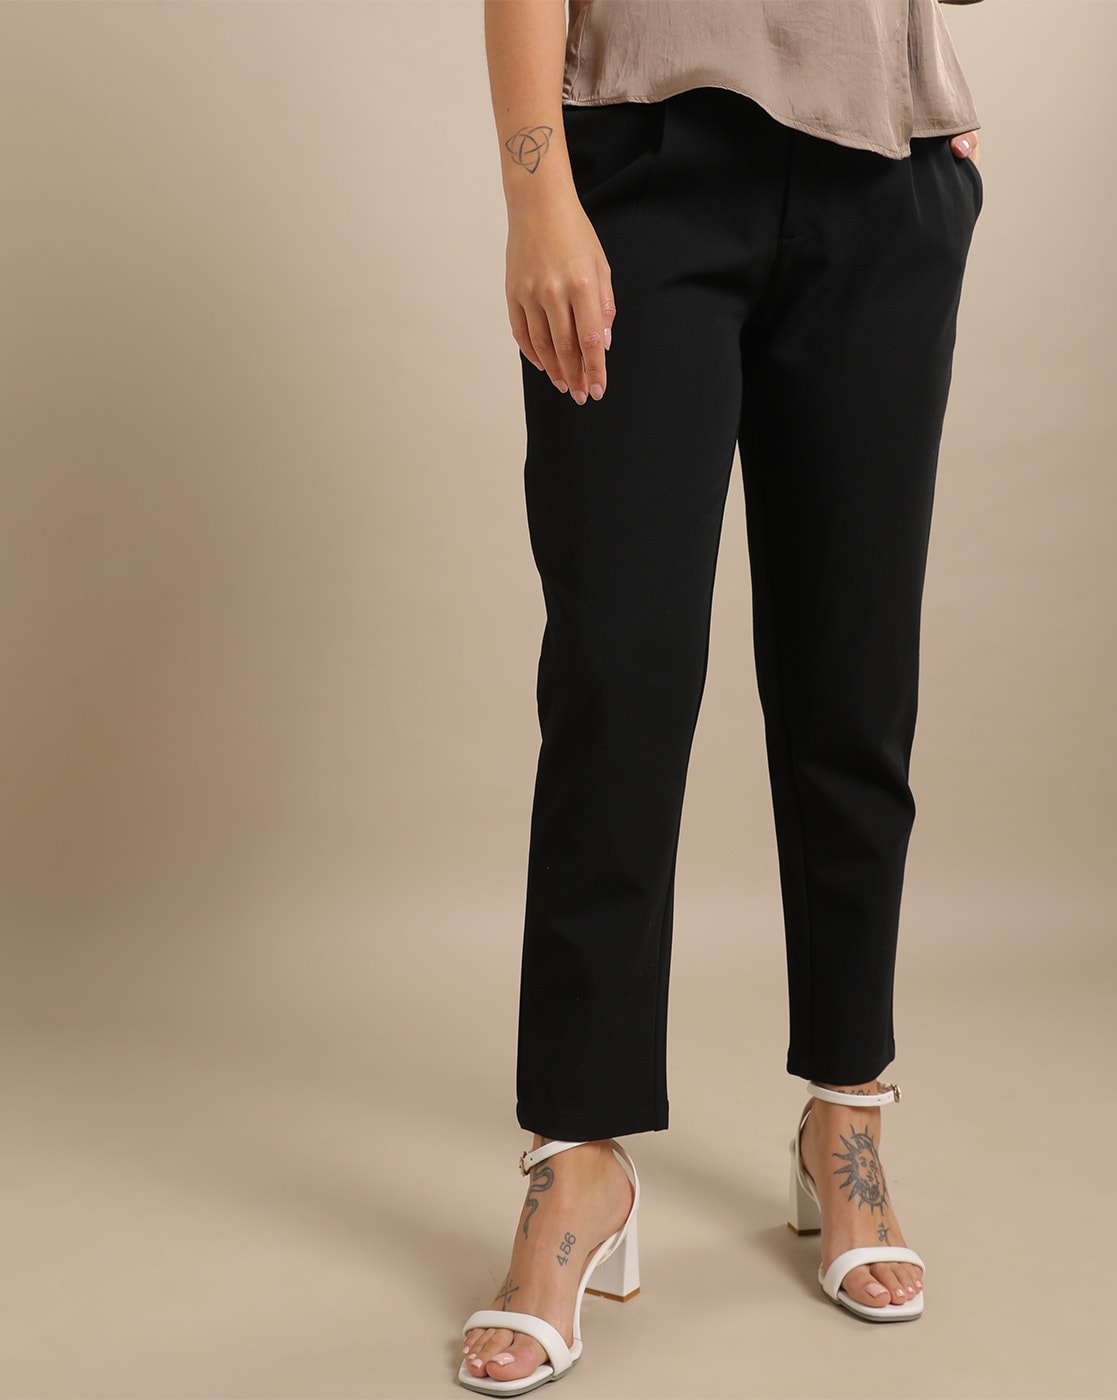 Buy Black Trousers & Pants for Women by Fyre Rose Online